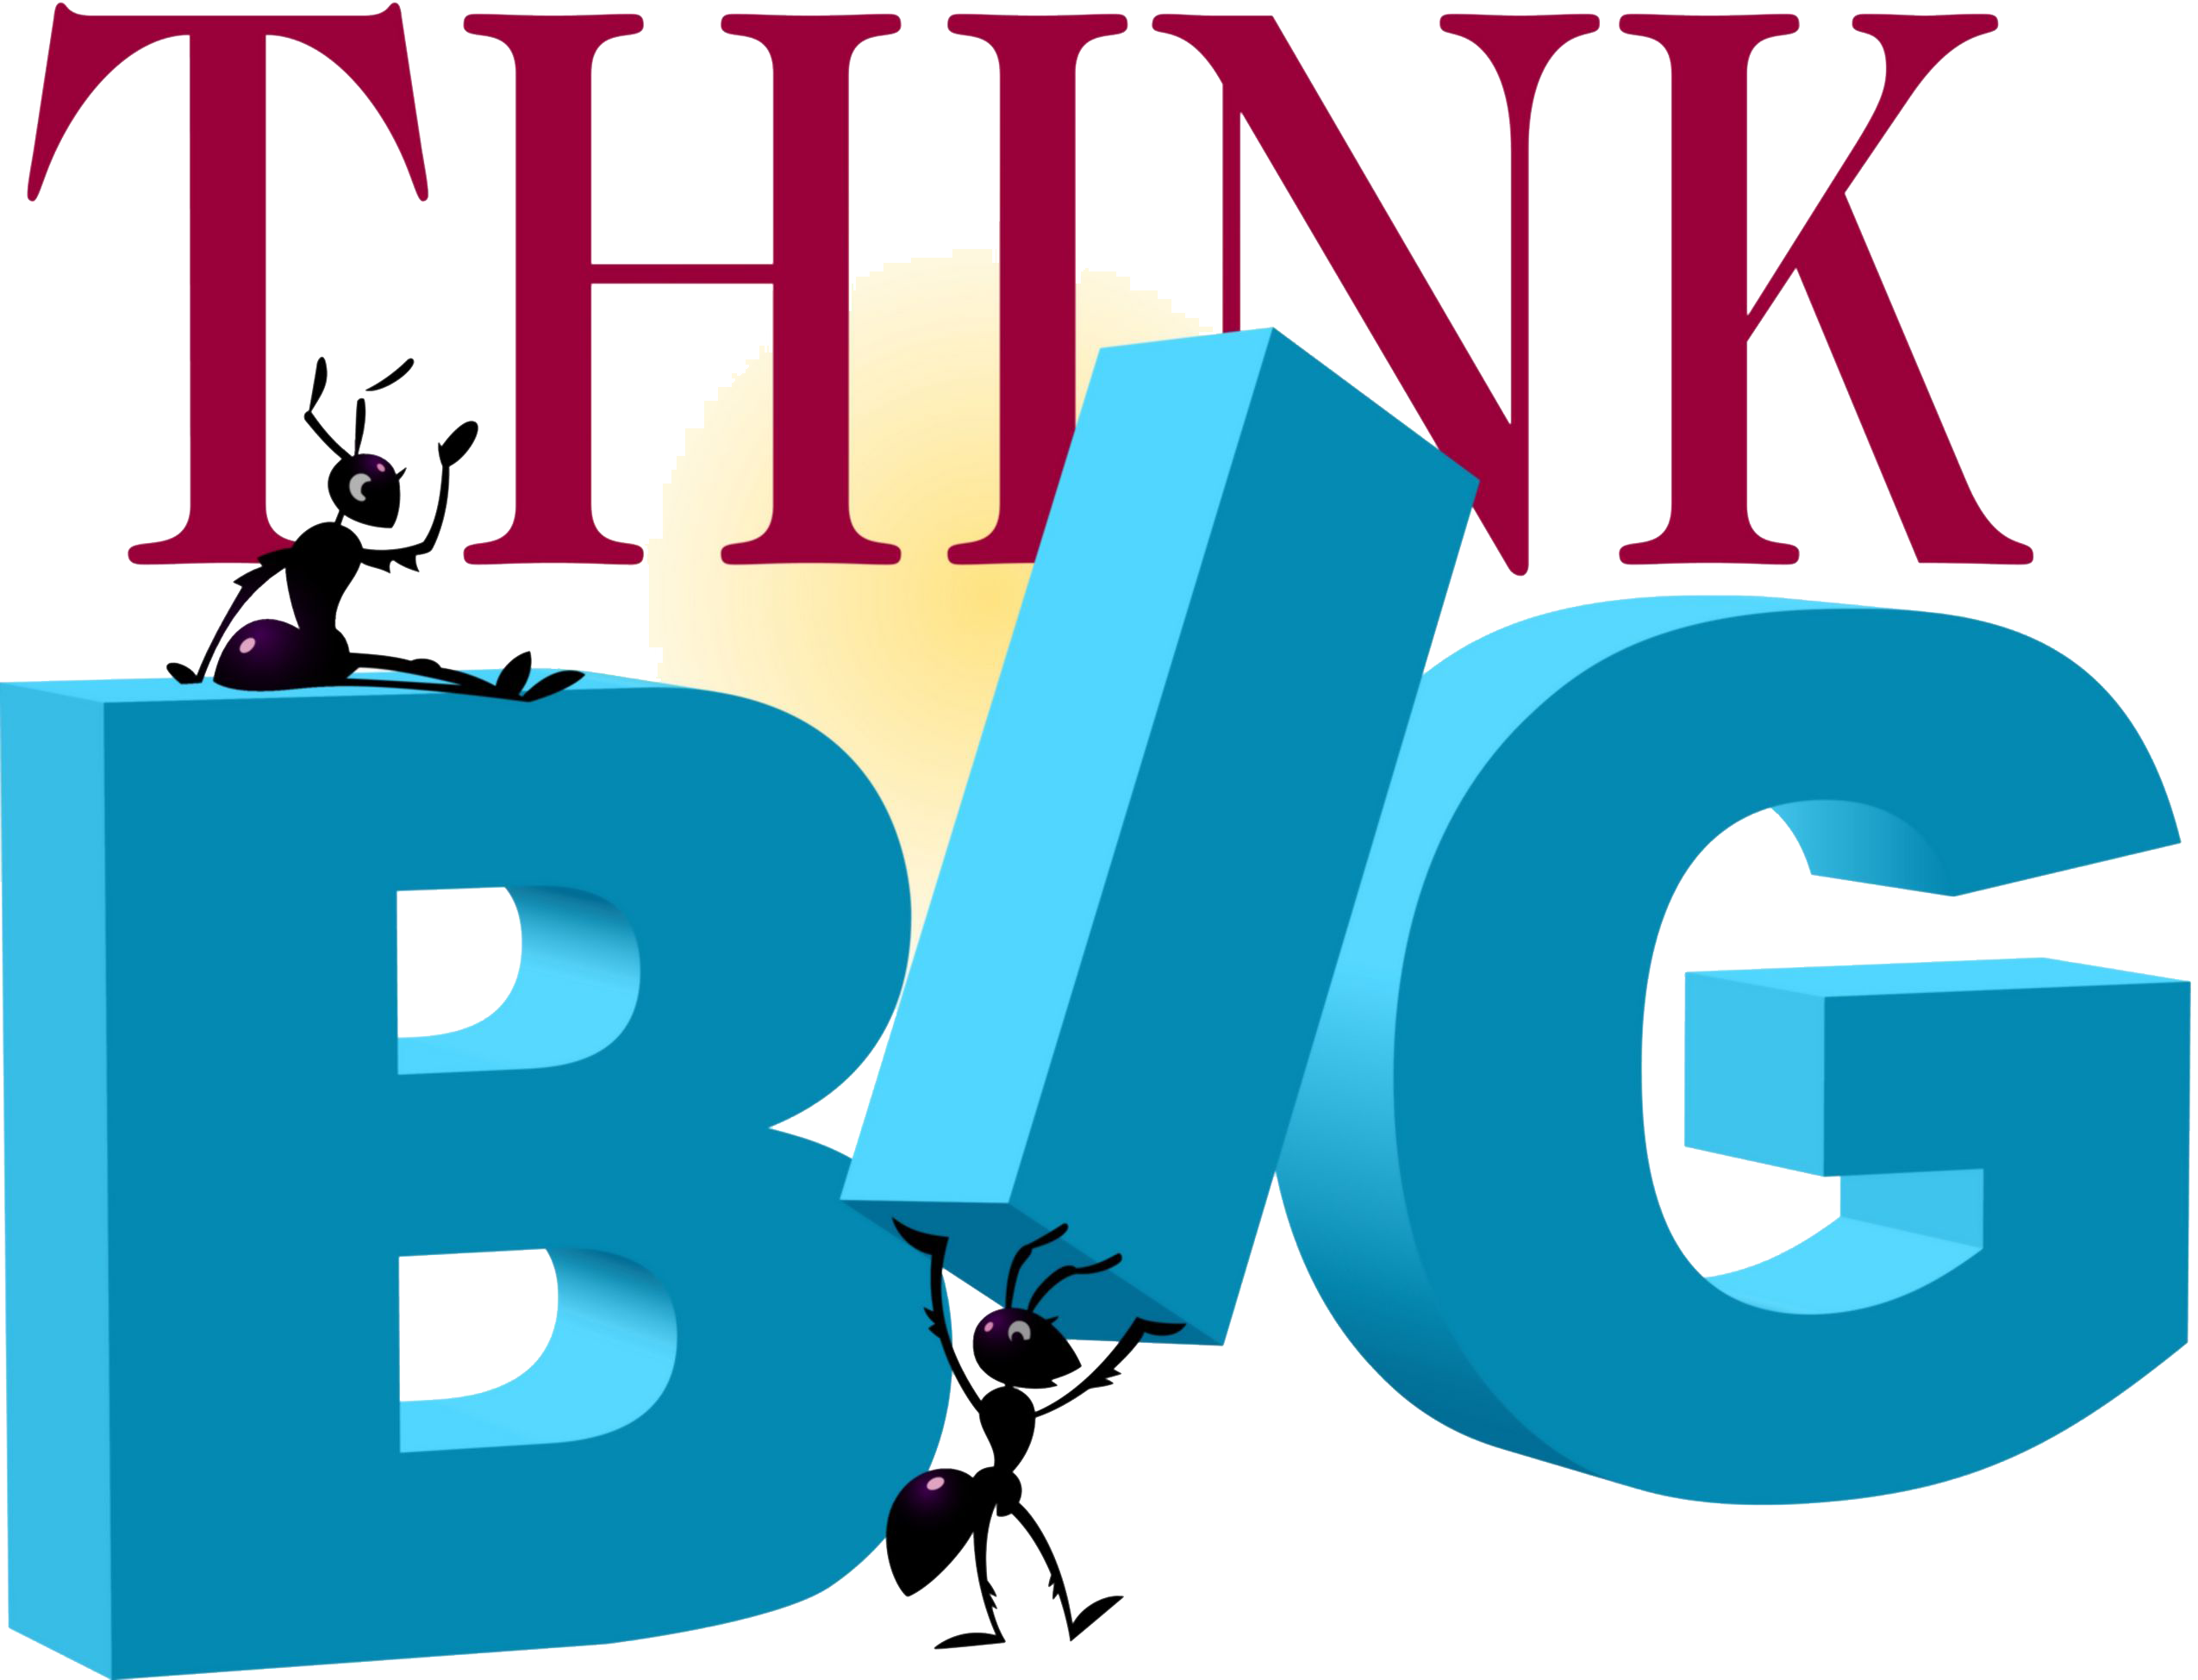 The Big Think